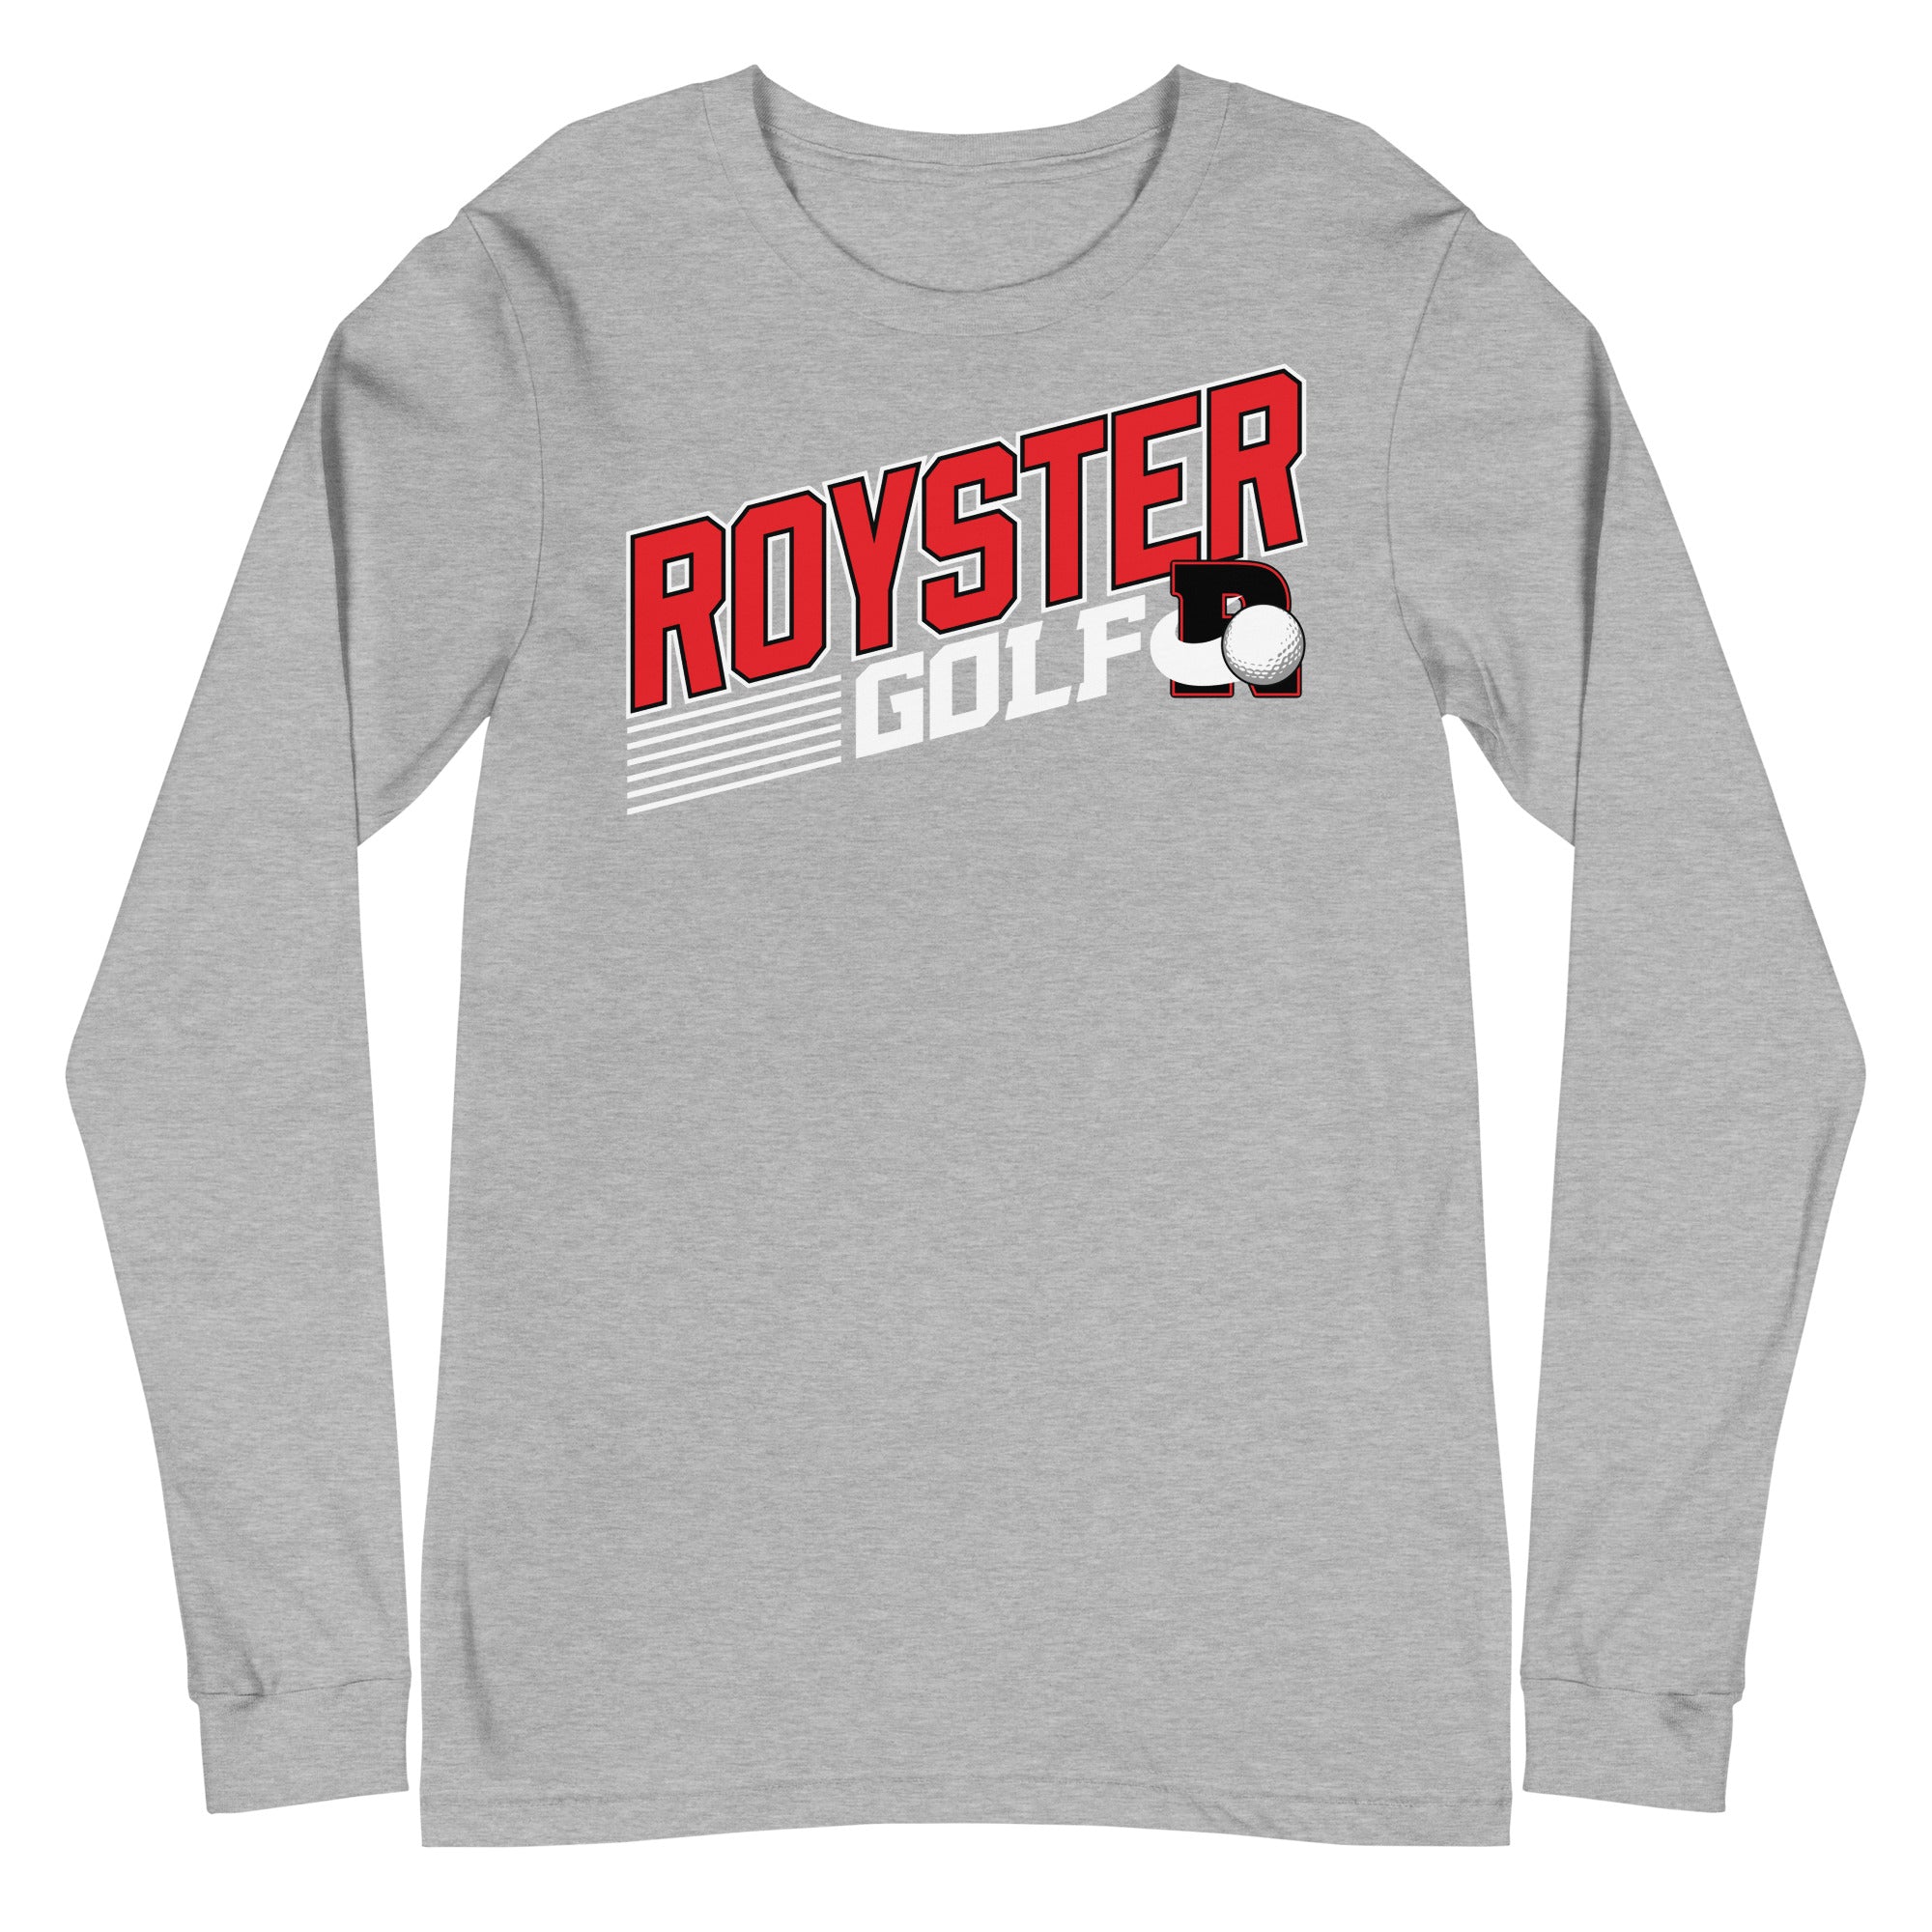 Royster Rockets Golf Unisex Long Sleeve Tee